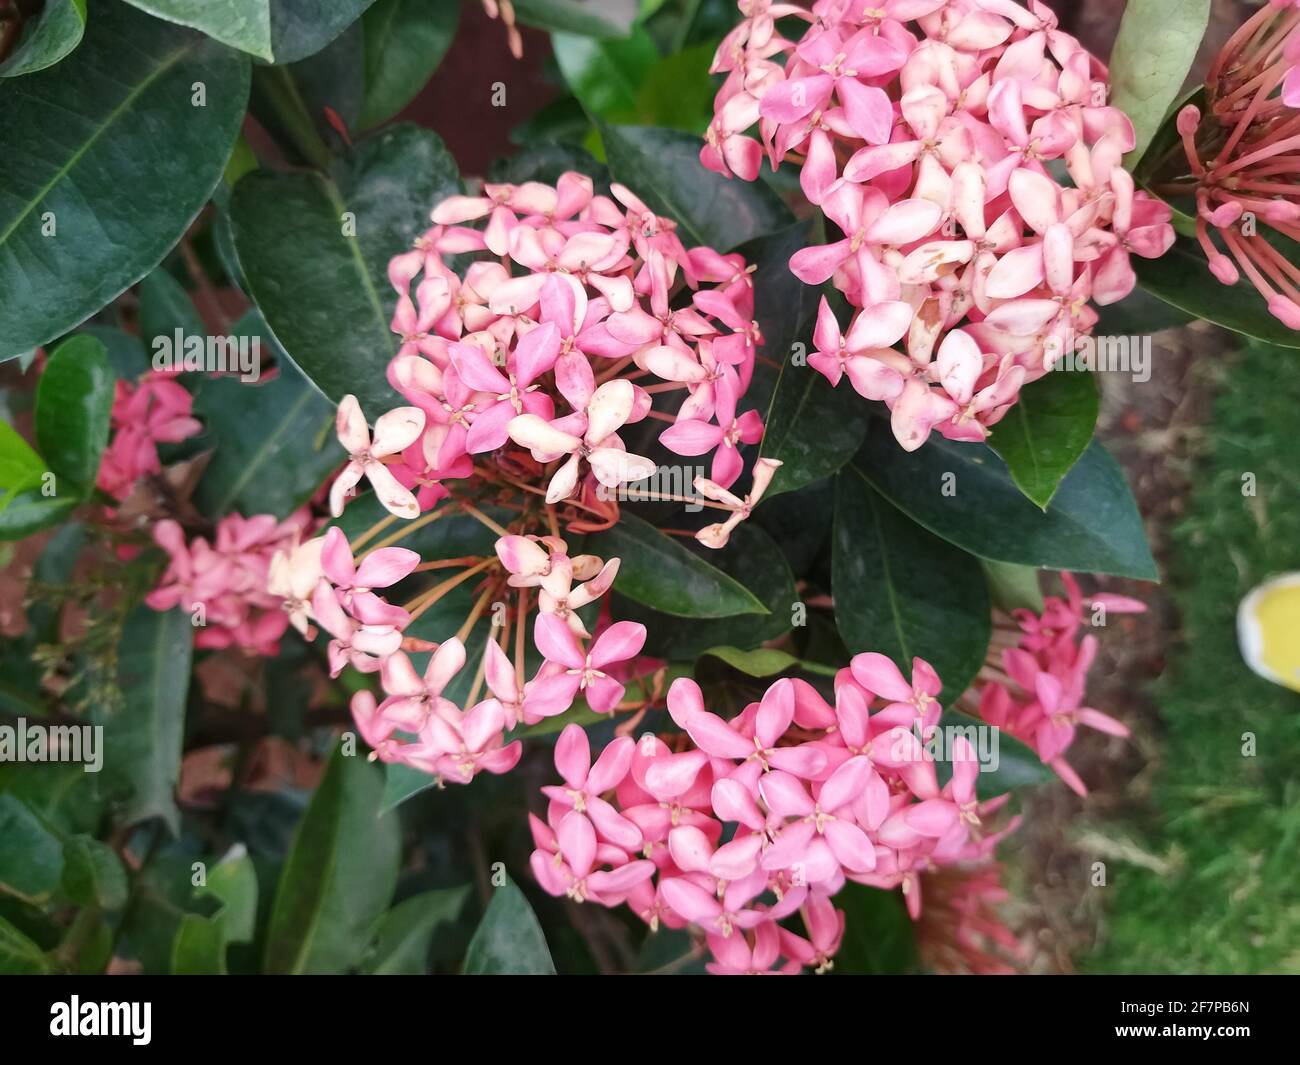 Amazing Pink Chinese Ixora Flower In The Garden Stock Photo